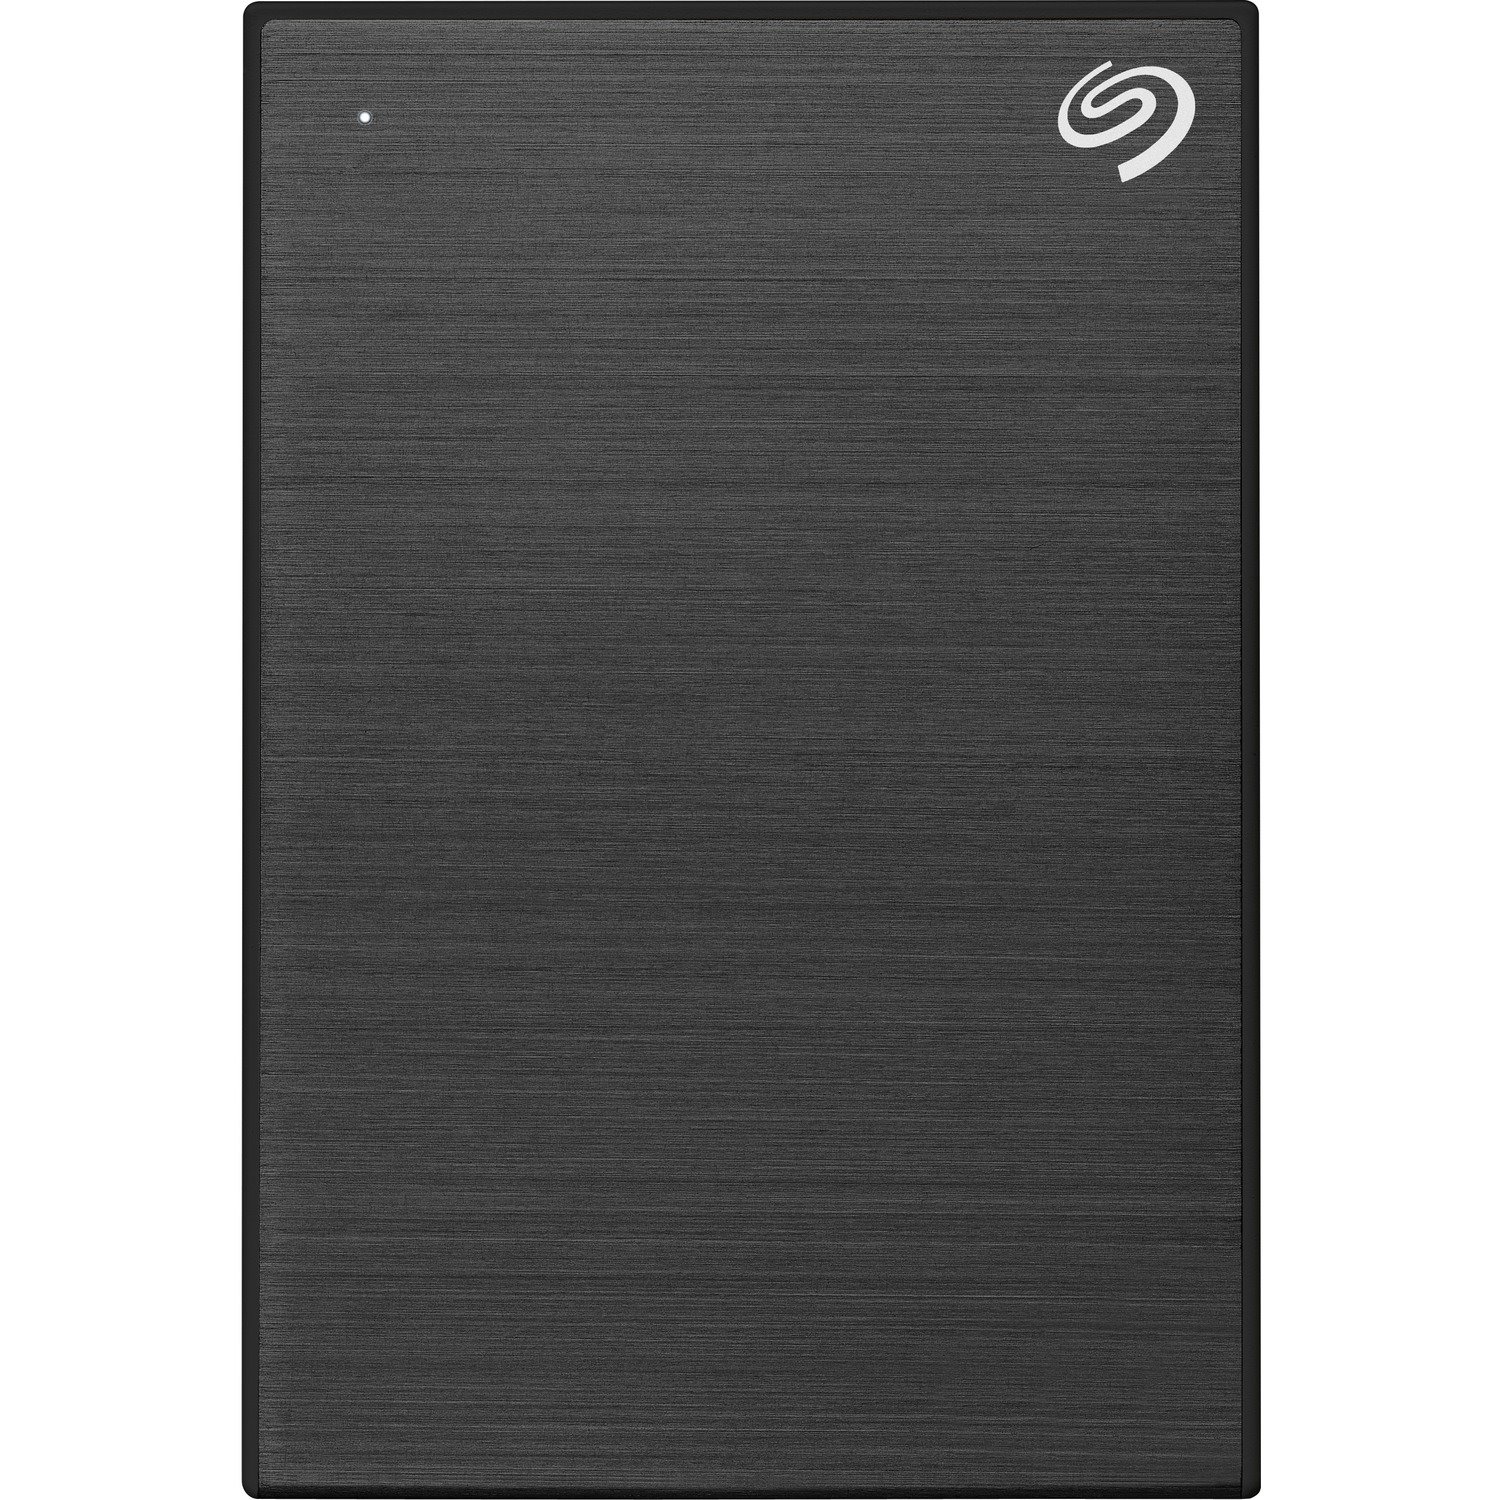 Seagate One Touch STKY1000400 1 TB Portable Hard Drive - External - Black